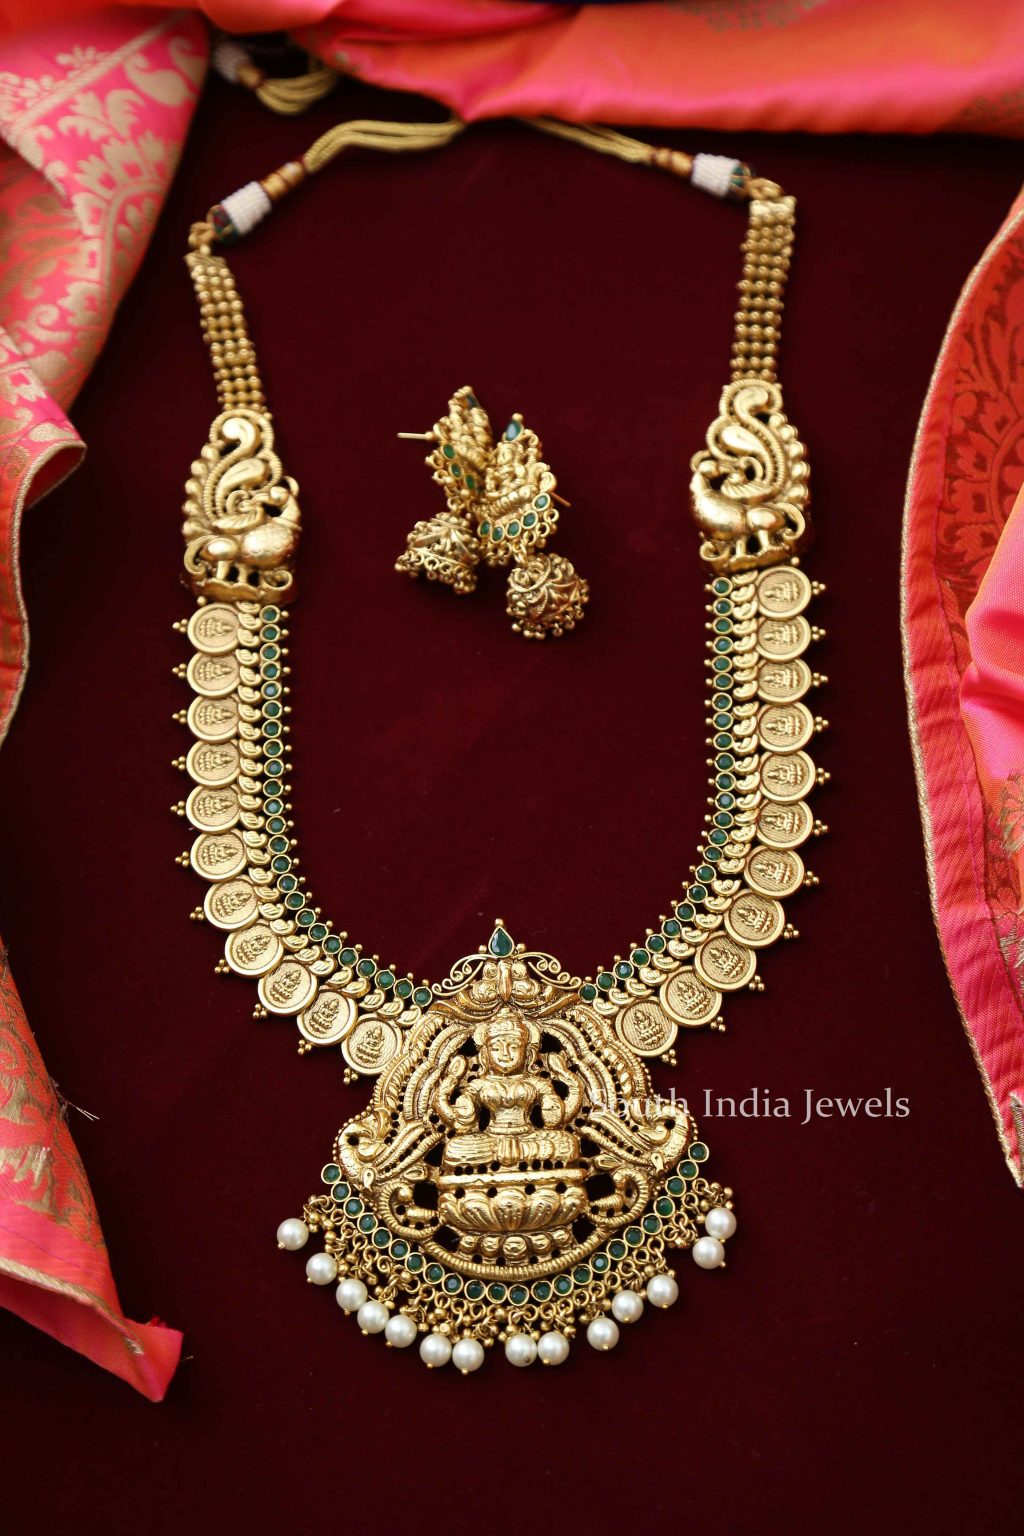 Stunning Laskmi Coin Haram - South India Jewels